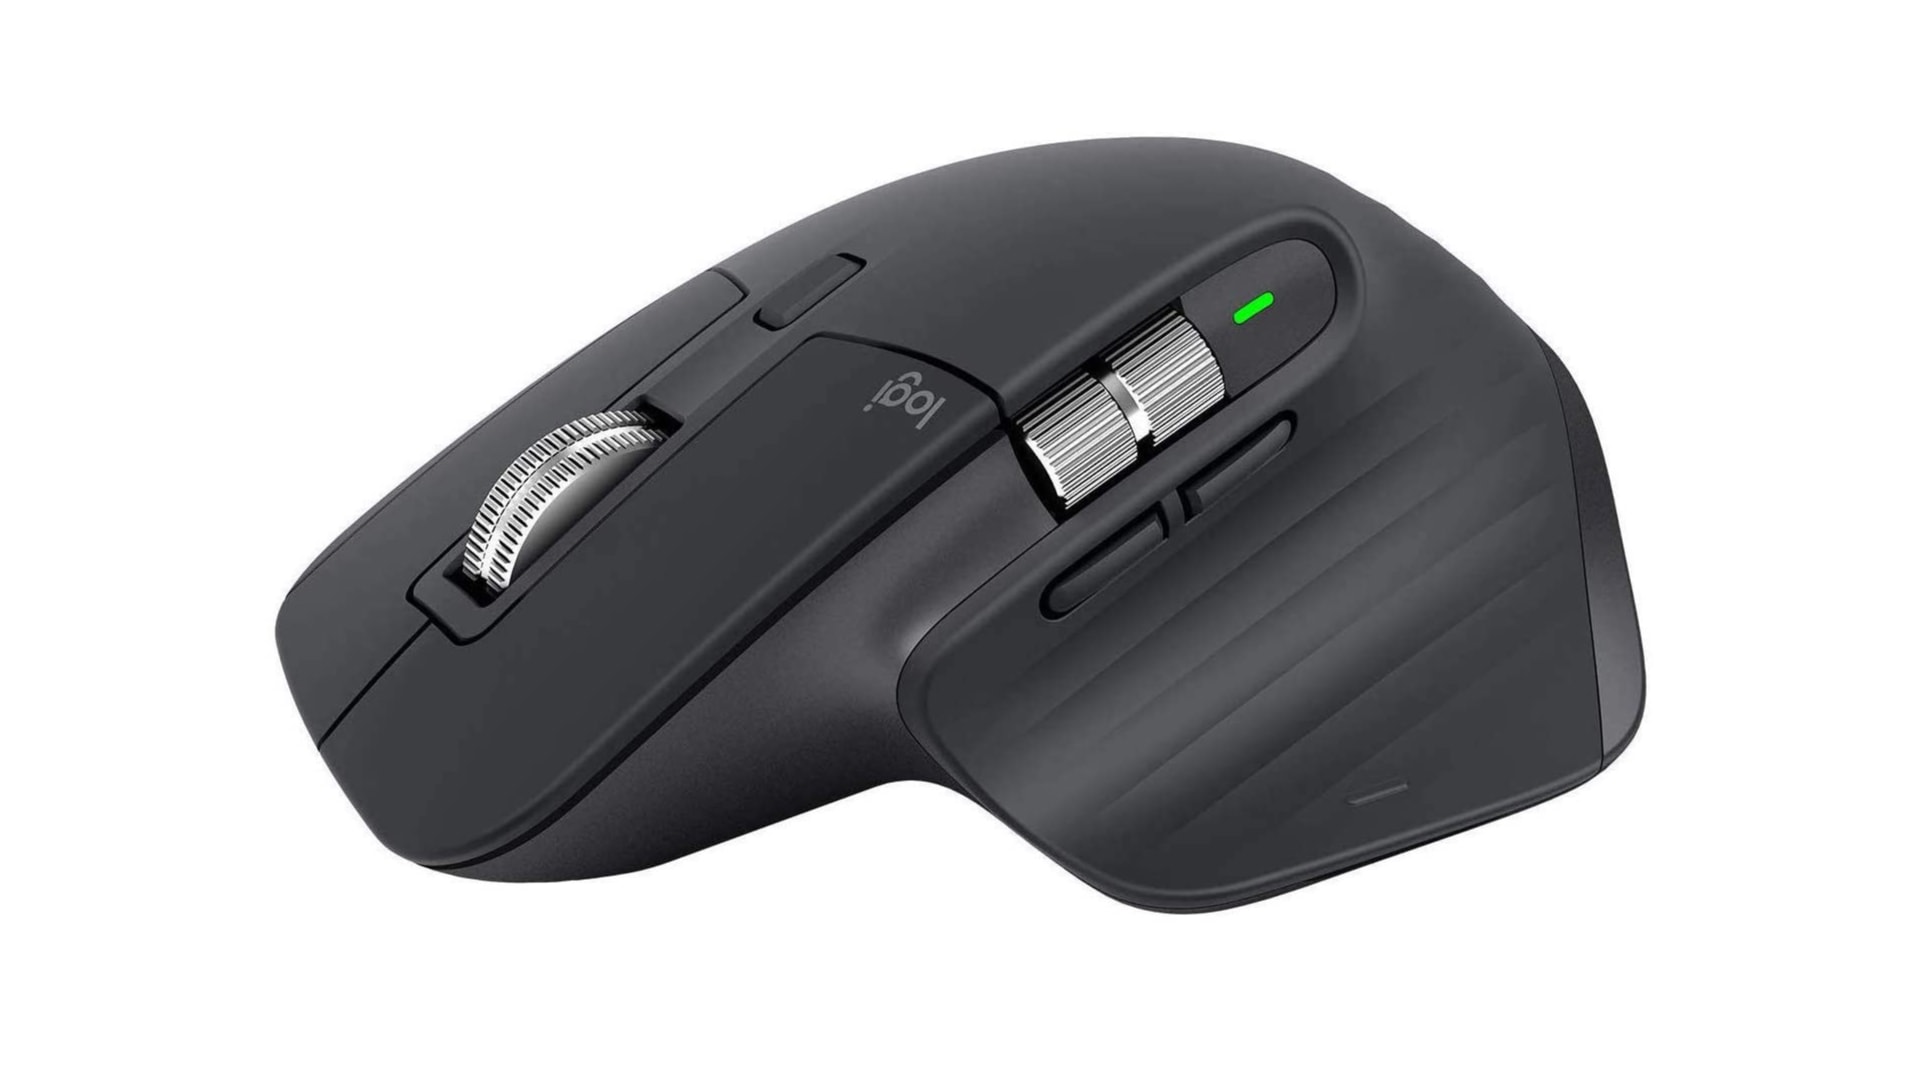 Logitech MX Master 3 mouse